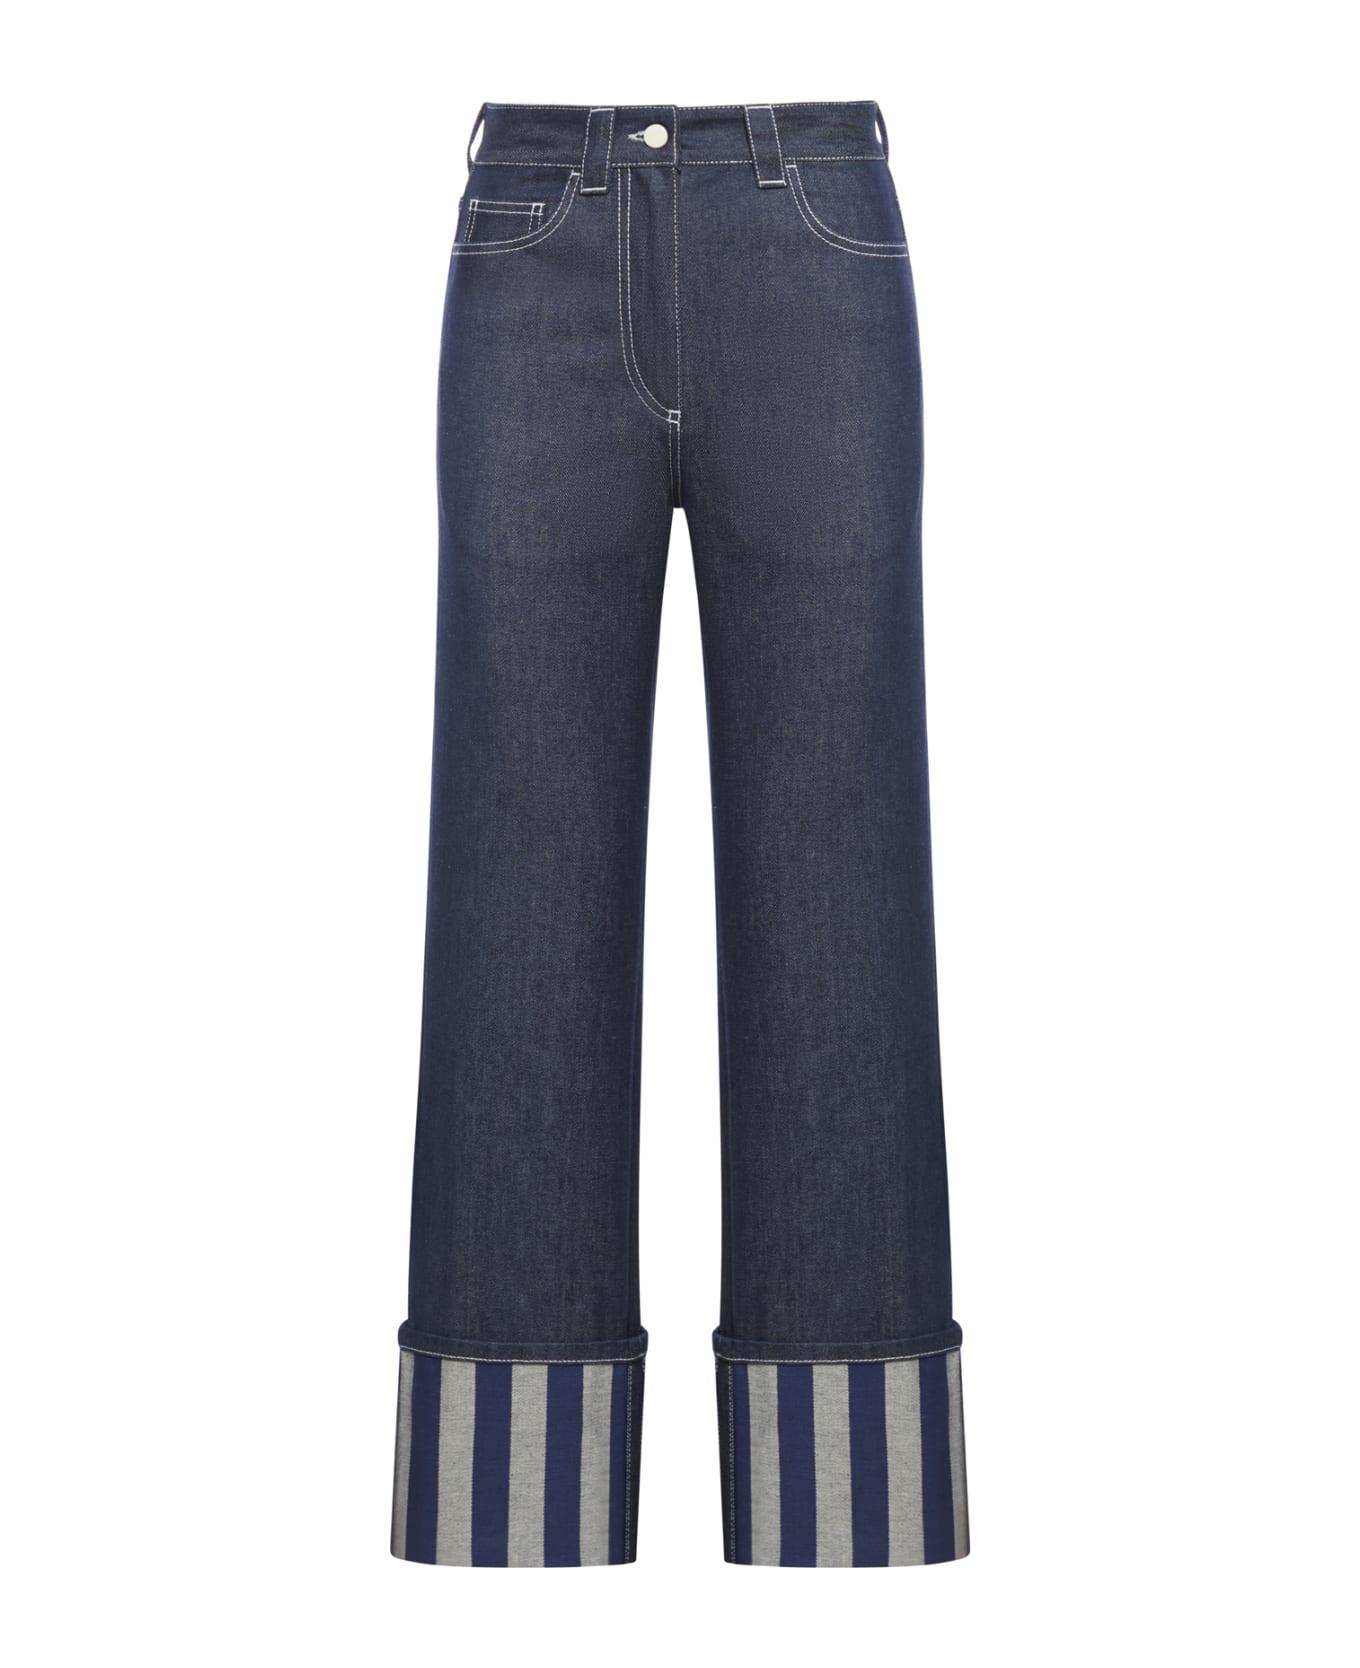 Sunnei Classic Pants - Raw Electric Blue Stripes